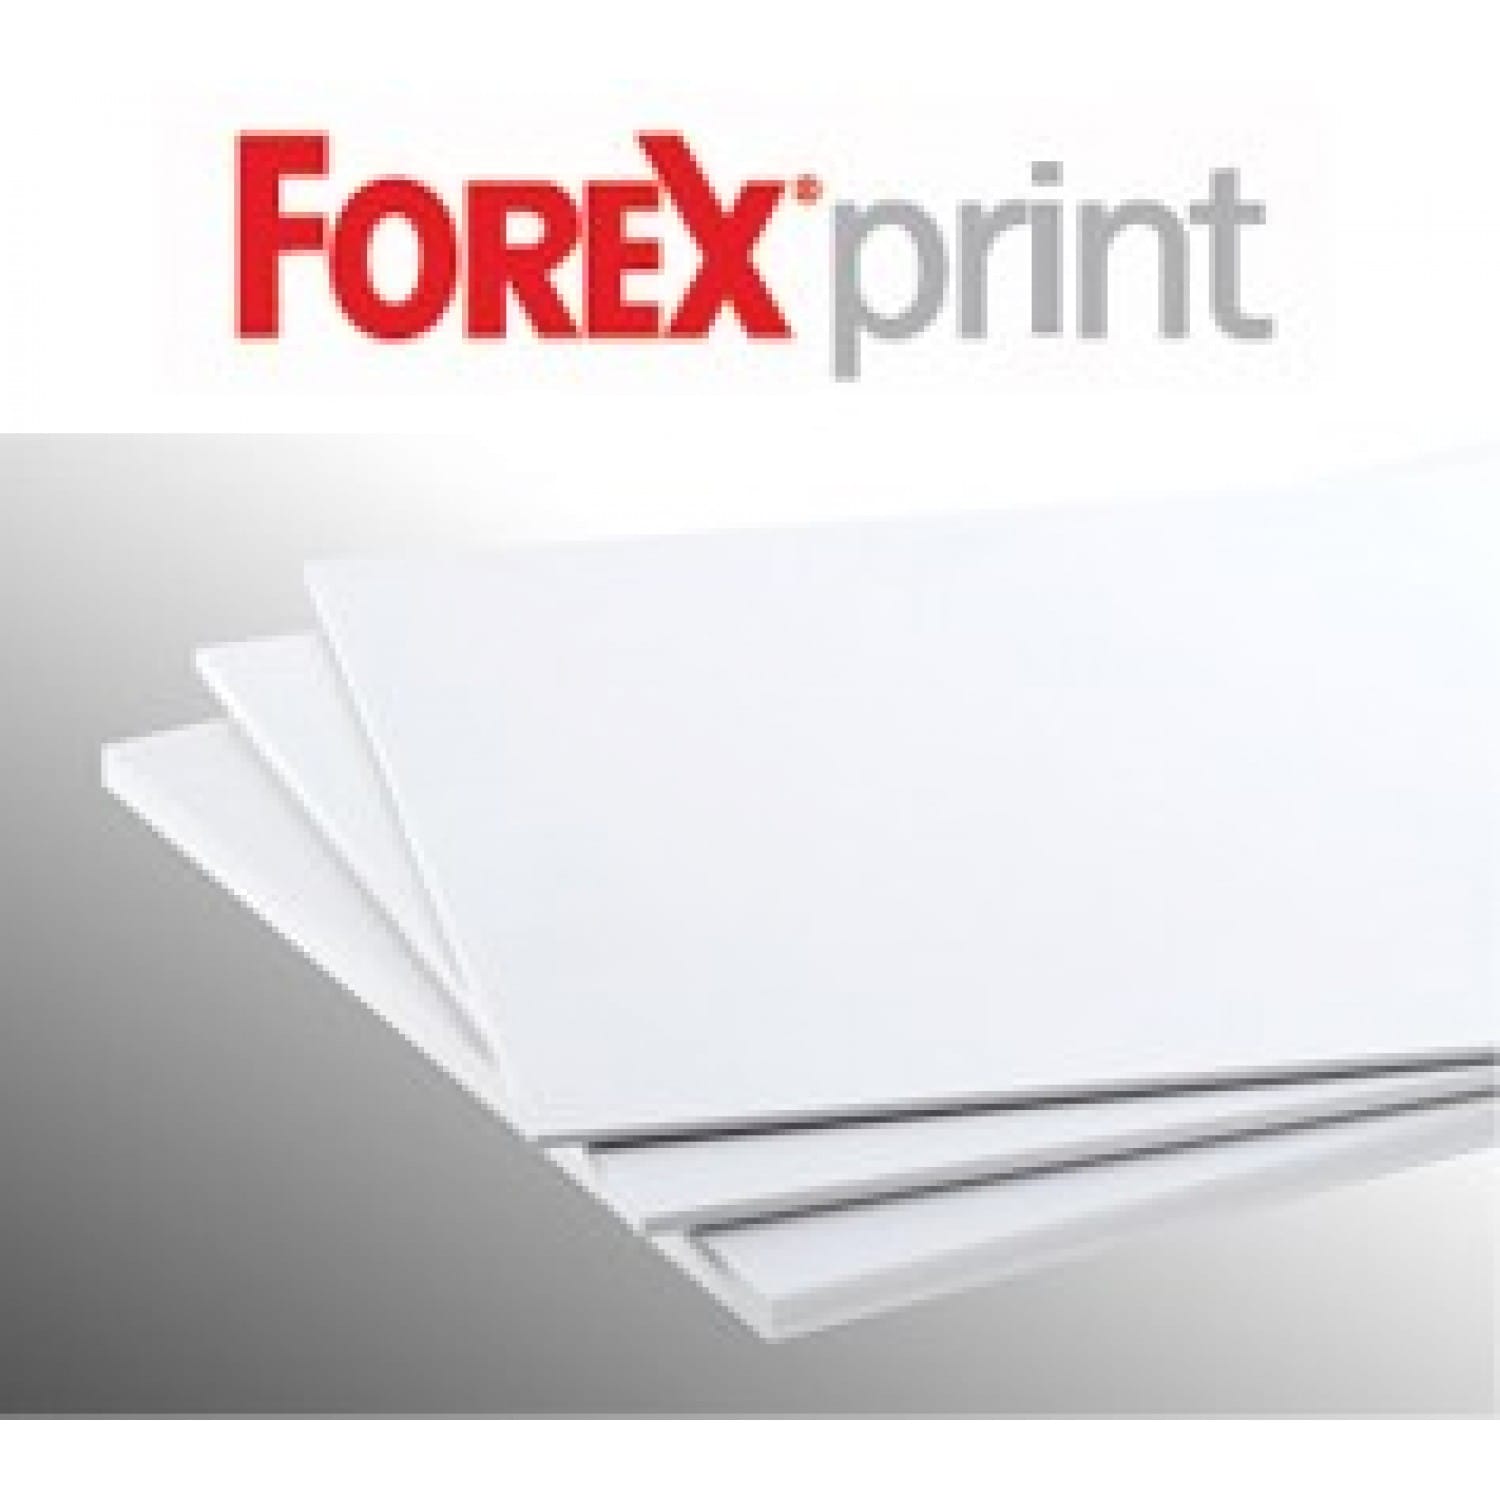 Forex materials delhi trade binary option